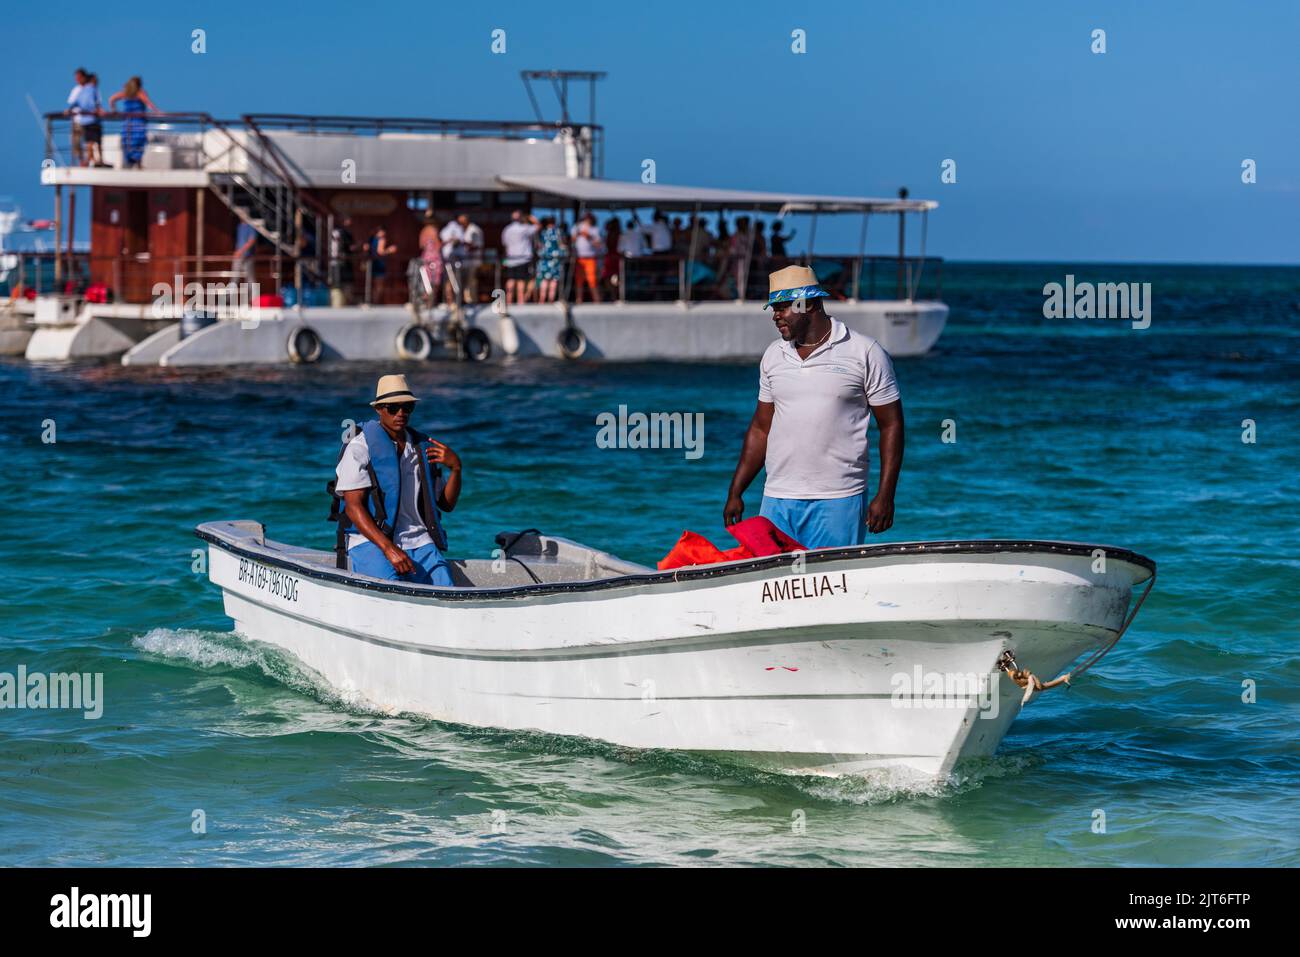 Punta Cana/ Dominican Republic - June 11, 2016: Wedding party speedboat in Punta Cana, Dominican Republic. Stock Photo